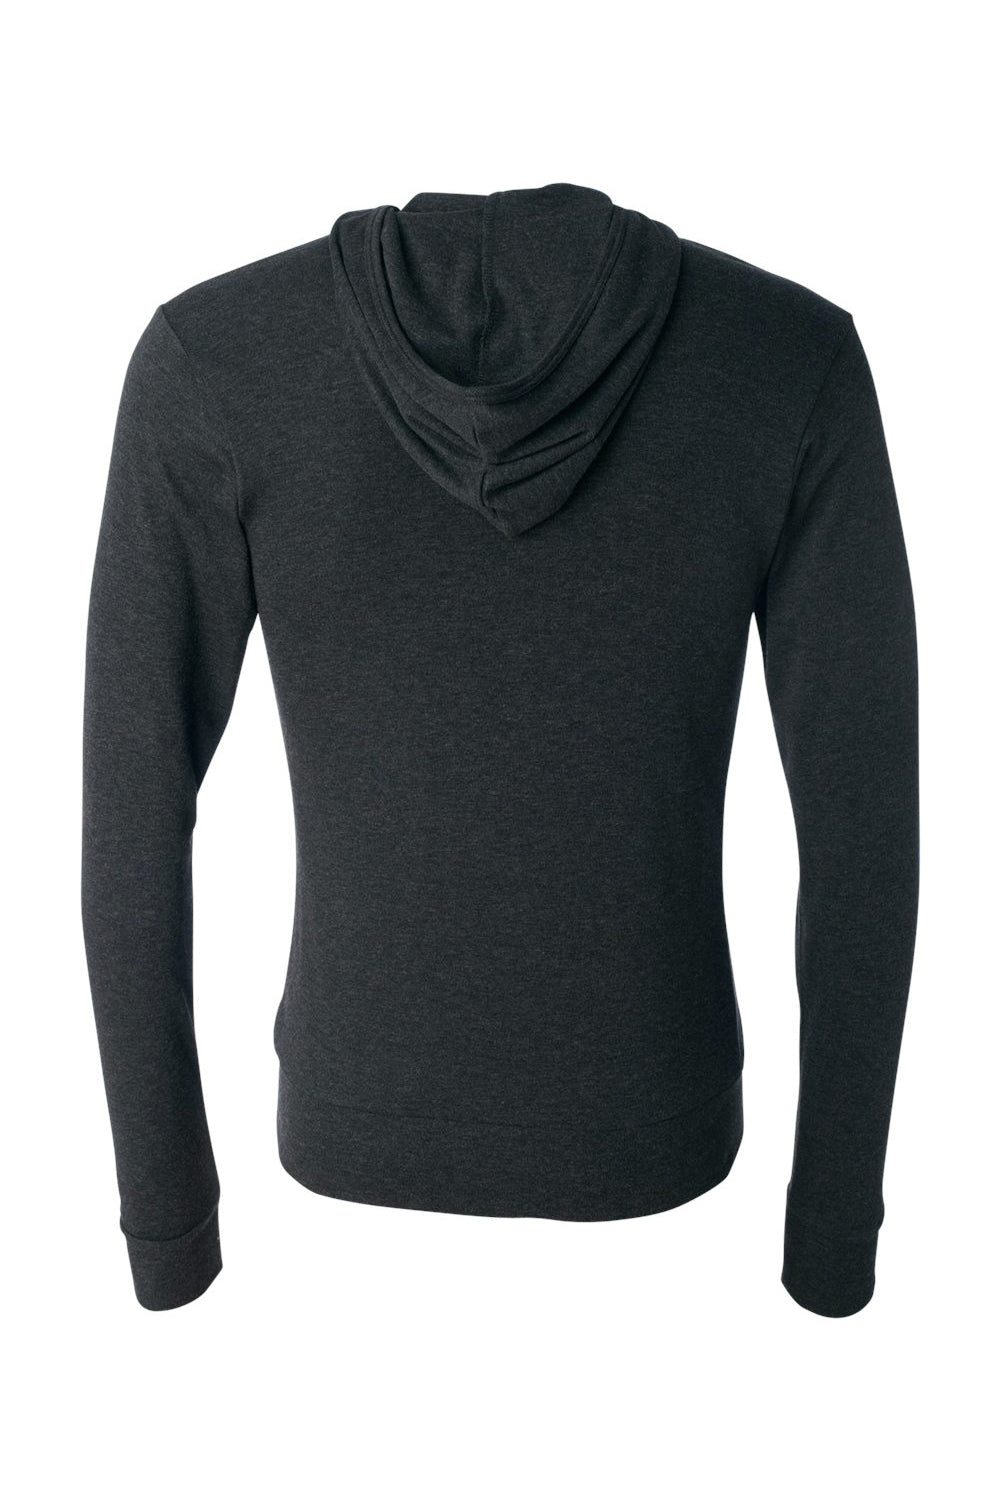 Bella + Canvas BC3939/3939 Mens Full Zip Long Sleeve Hooded T-Shirt Hoodie Charcoal Black Flat Back